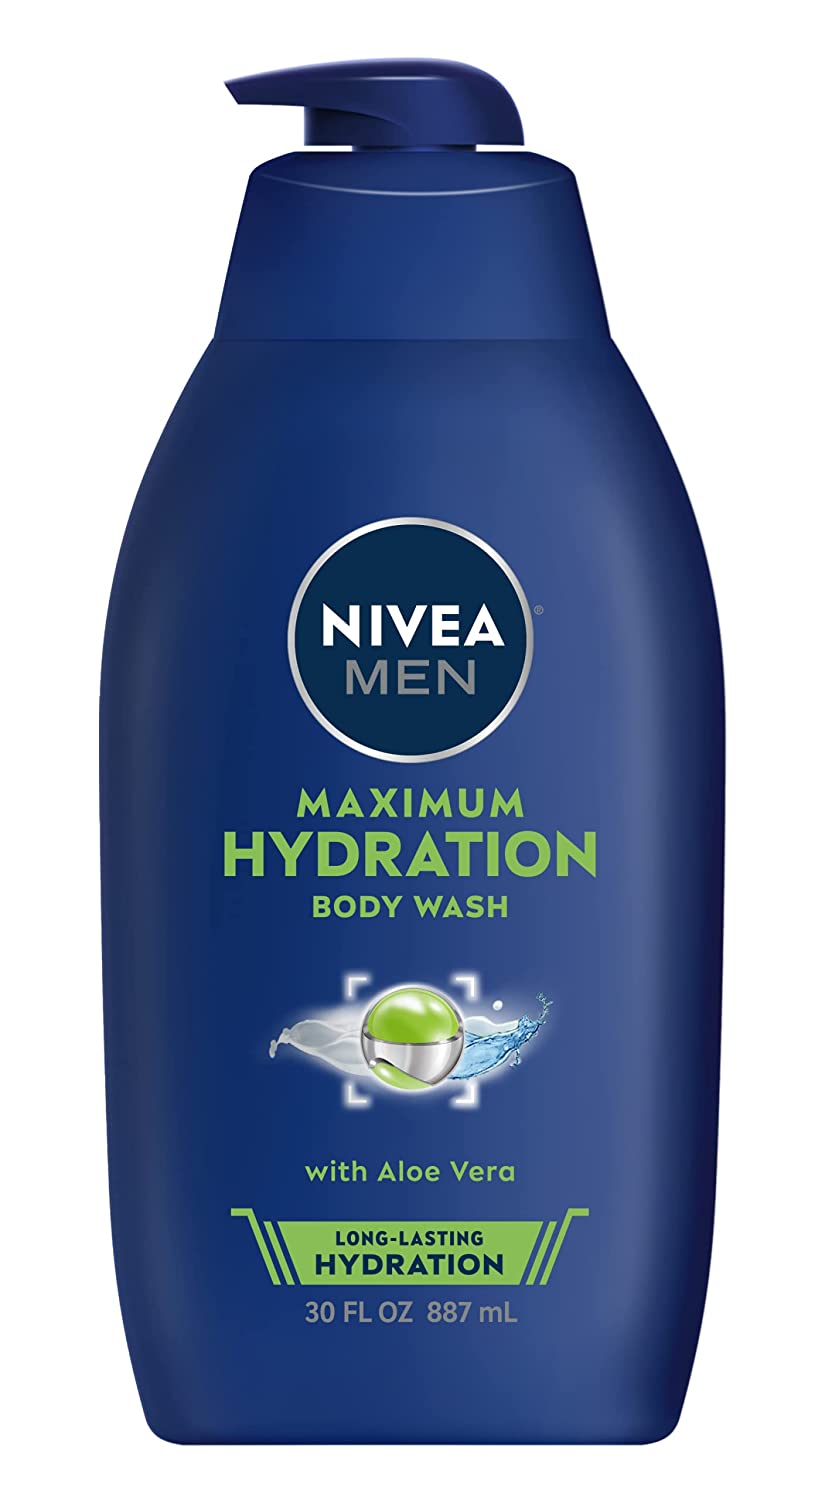 30-Oz Nivea Men Maximum Hydration Body Wash w/ Aloe Vera $5.10 + Free Shipping w/ Prime or on $25+